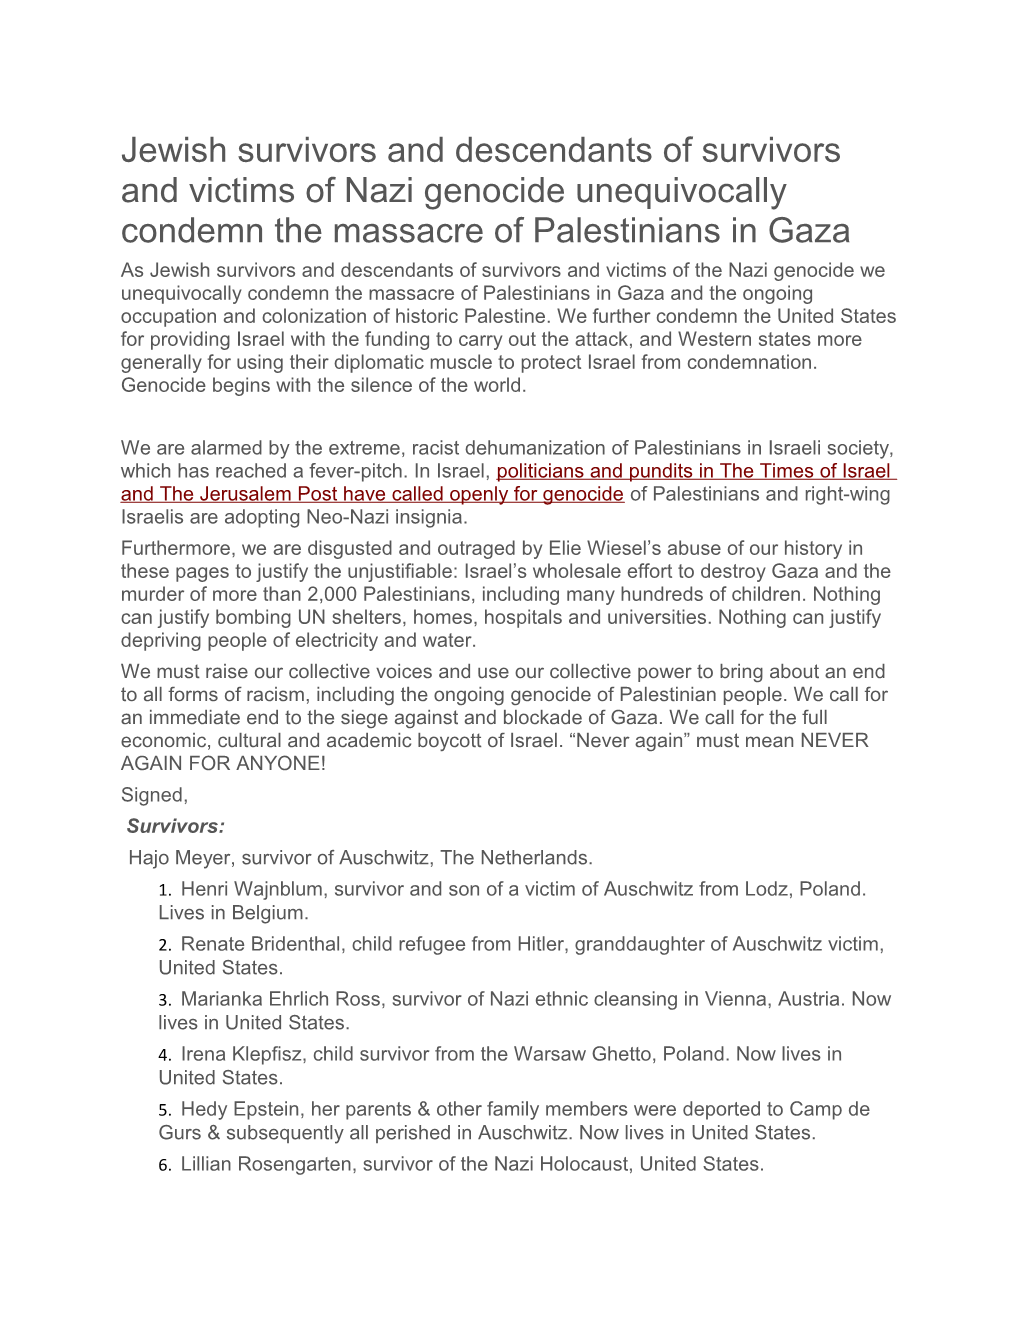 Jewish Survivors and Descendants of Survivors and Victims of Nazi Genocide Unequivocally